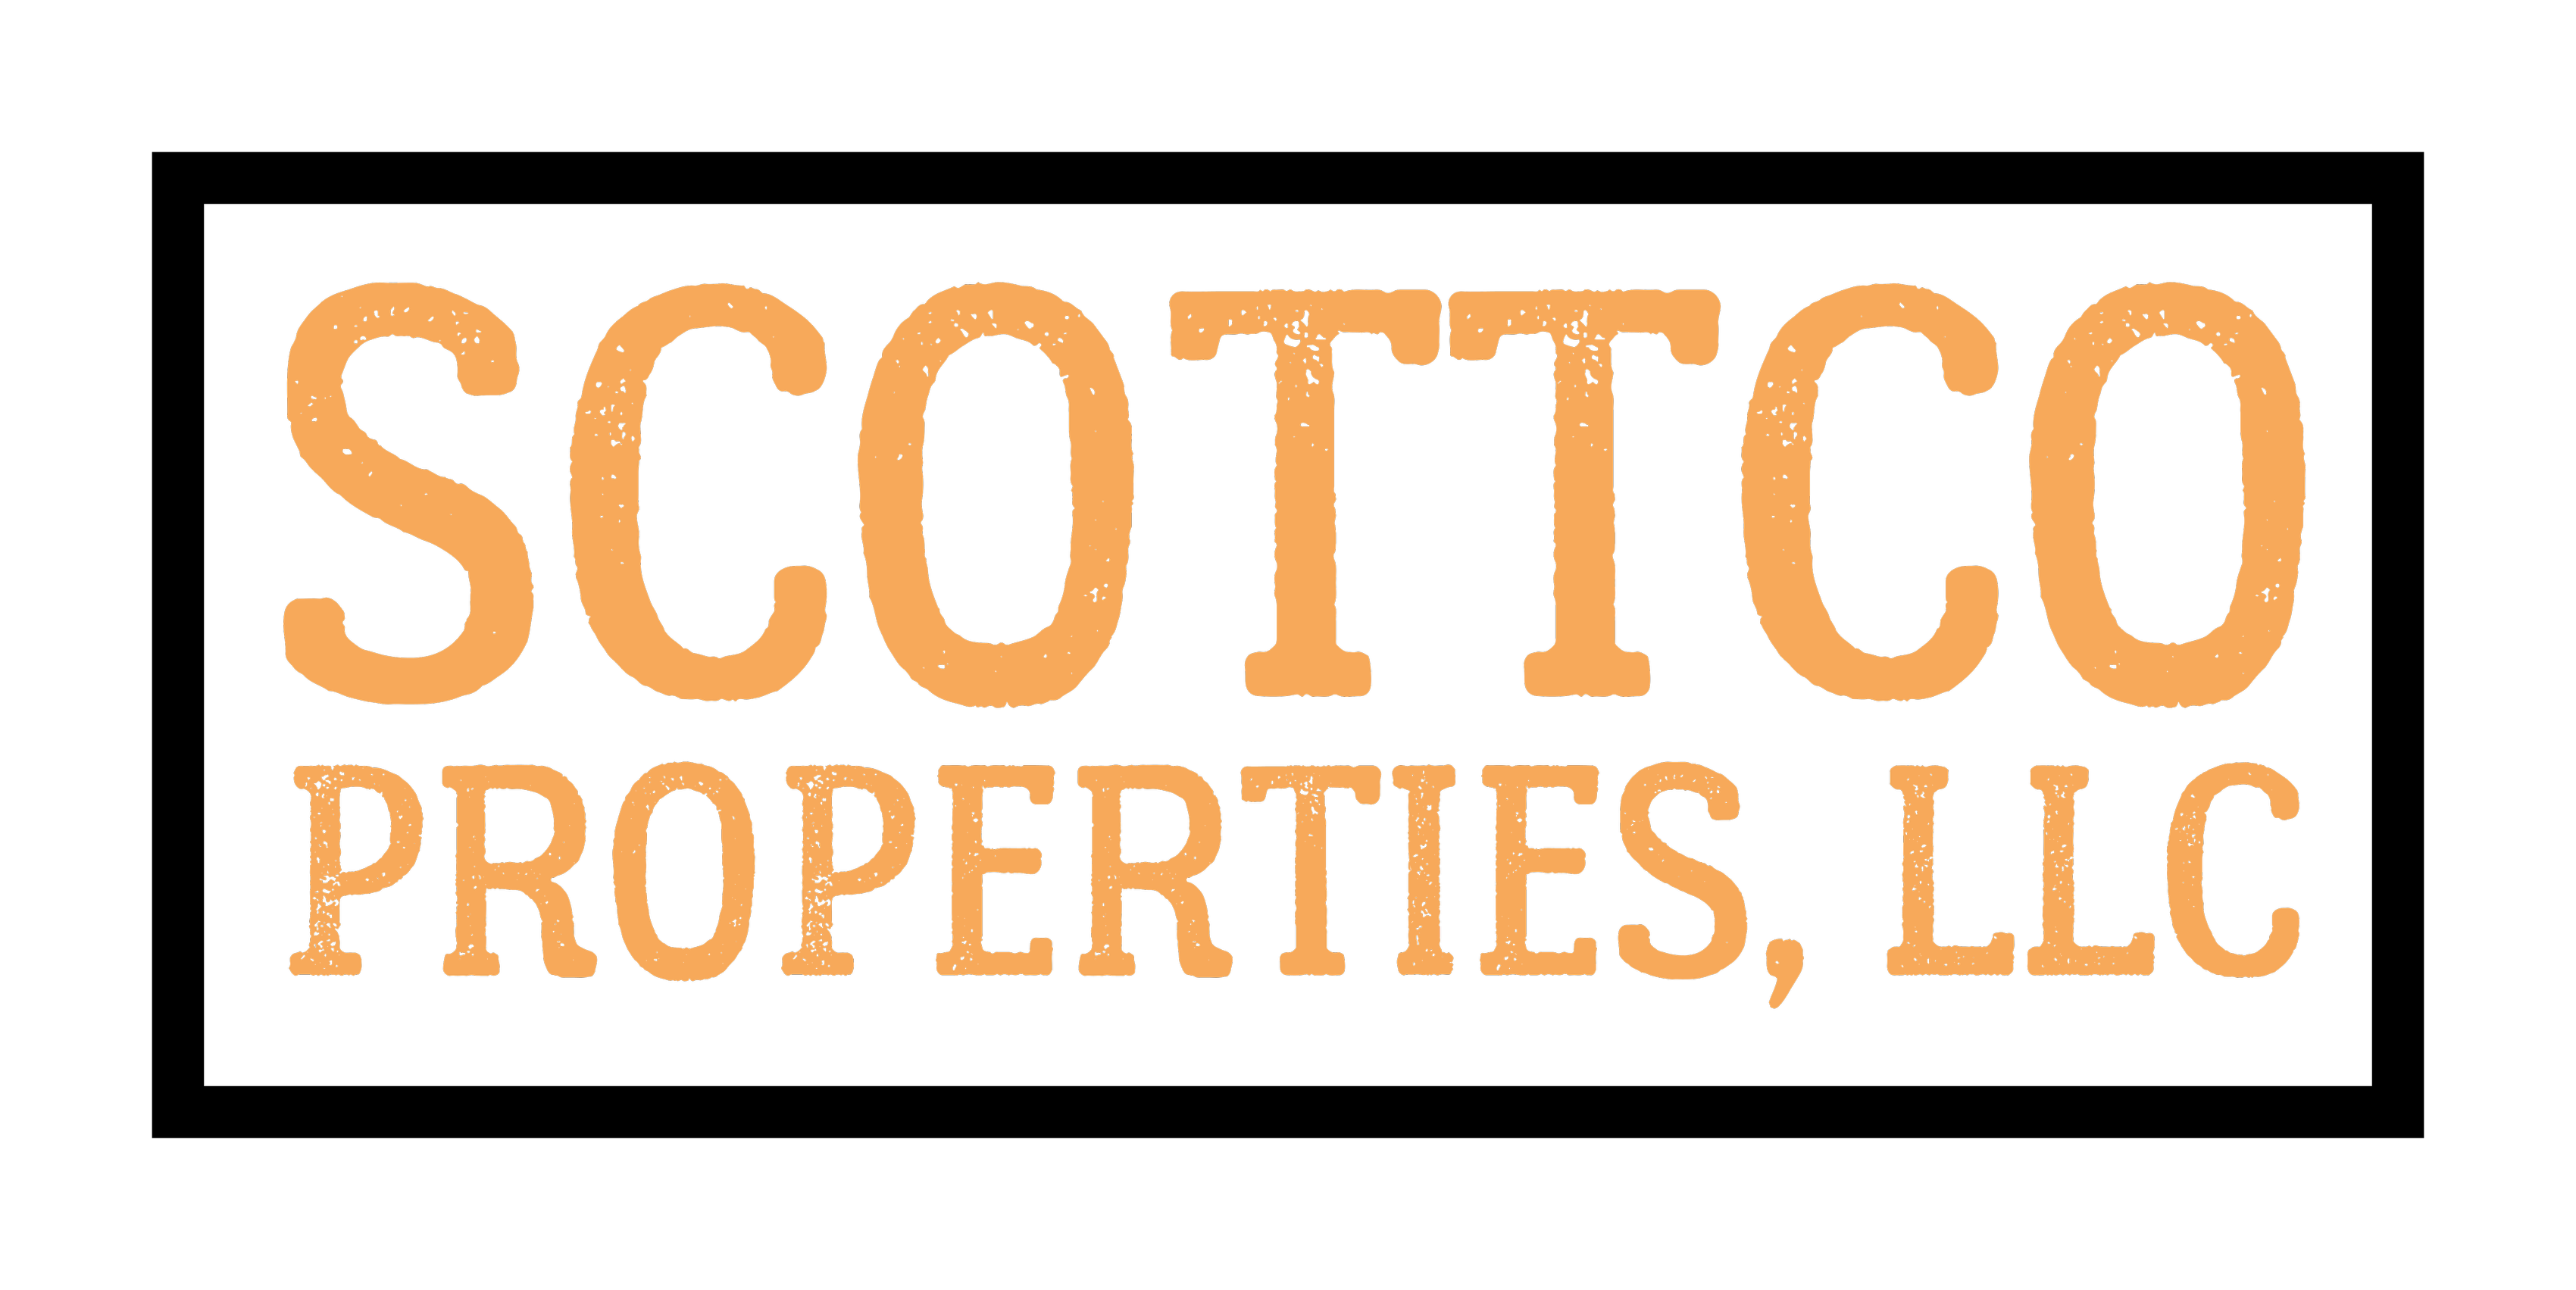 Scottco Properties, LLC logo